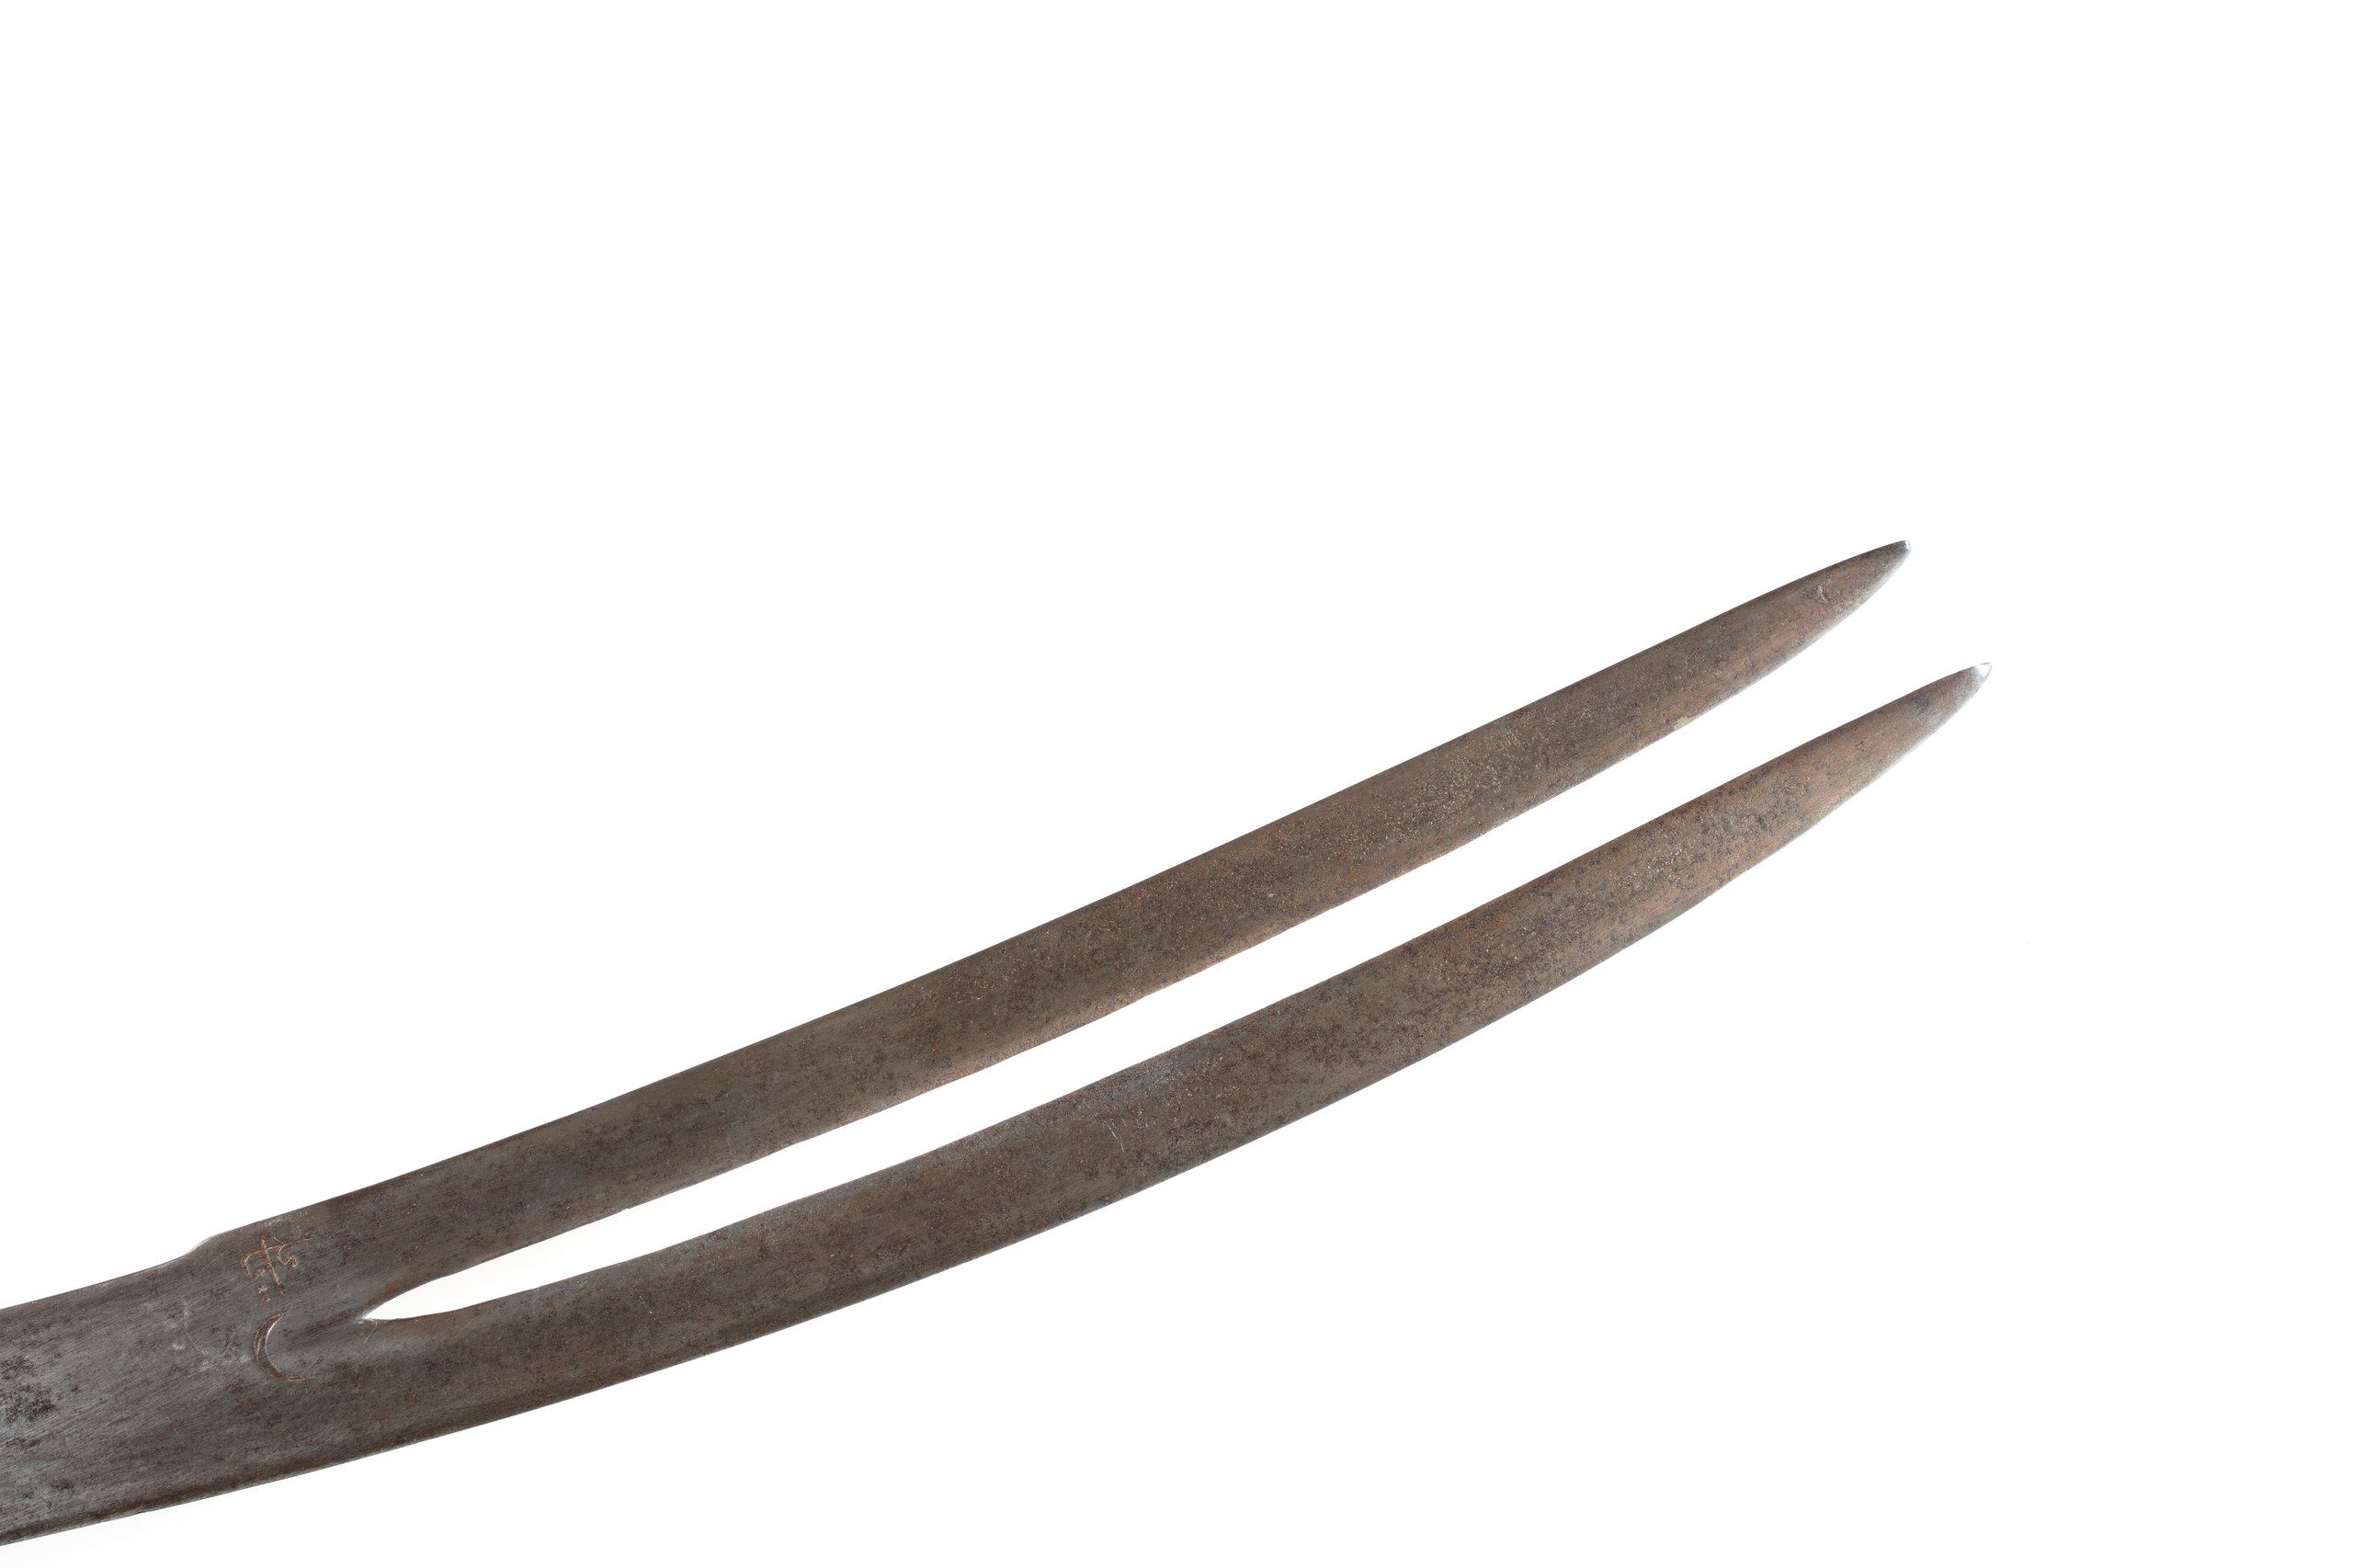 Symbolic sword (<i>Zulfiqar</i>) شمشیر نمادین: ذوالفقار